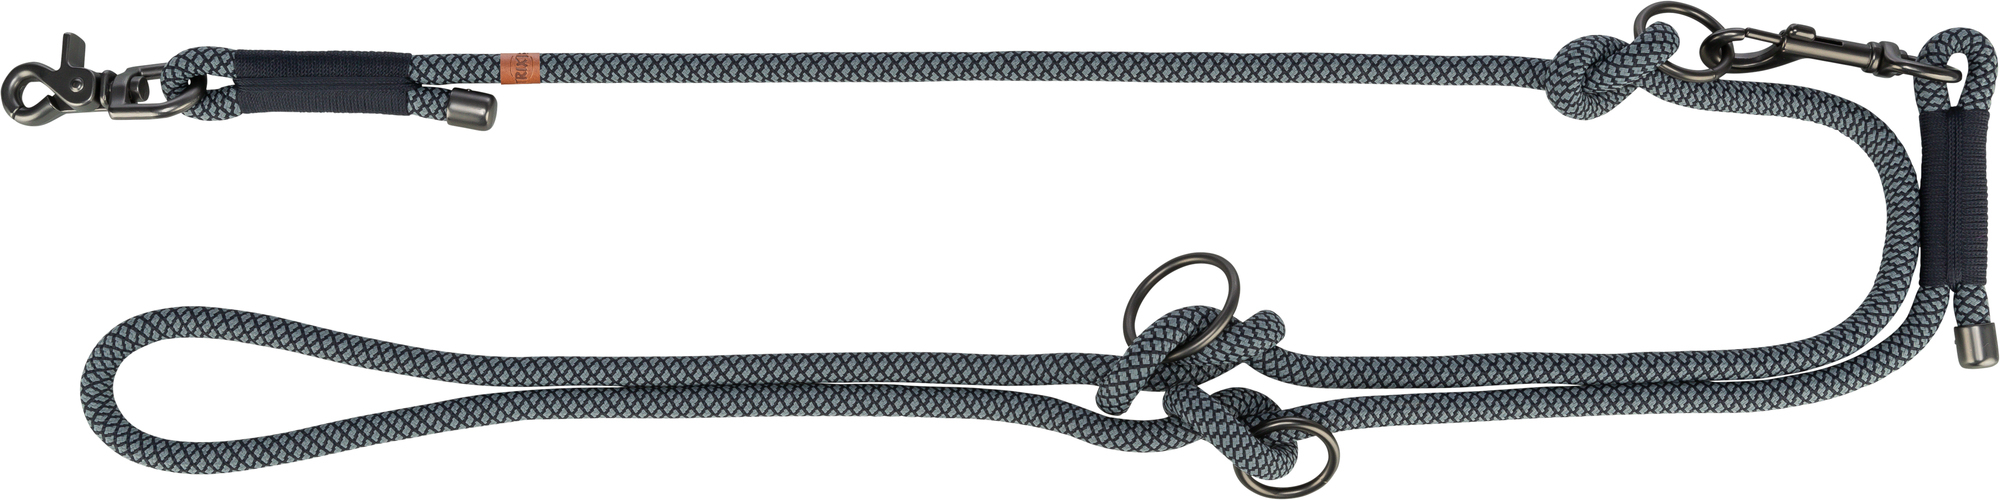 Correa Soft Rope Trixie - 2m - varios colores disponibles